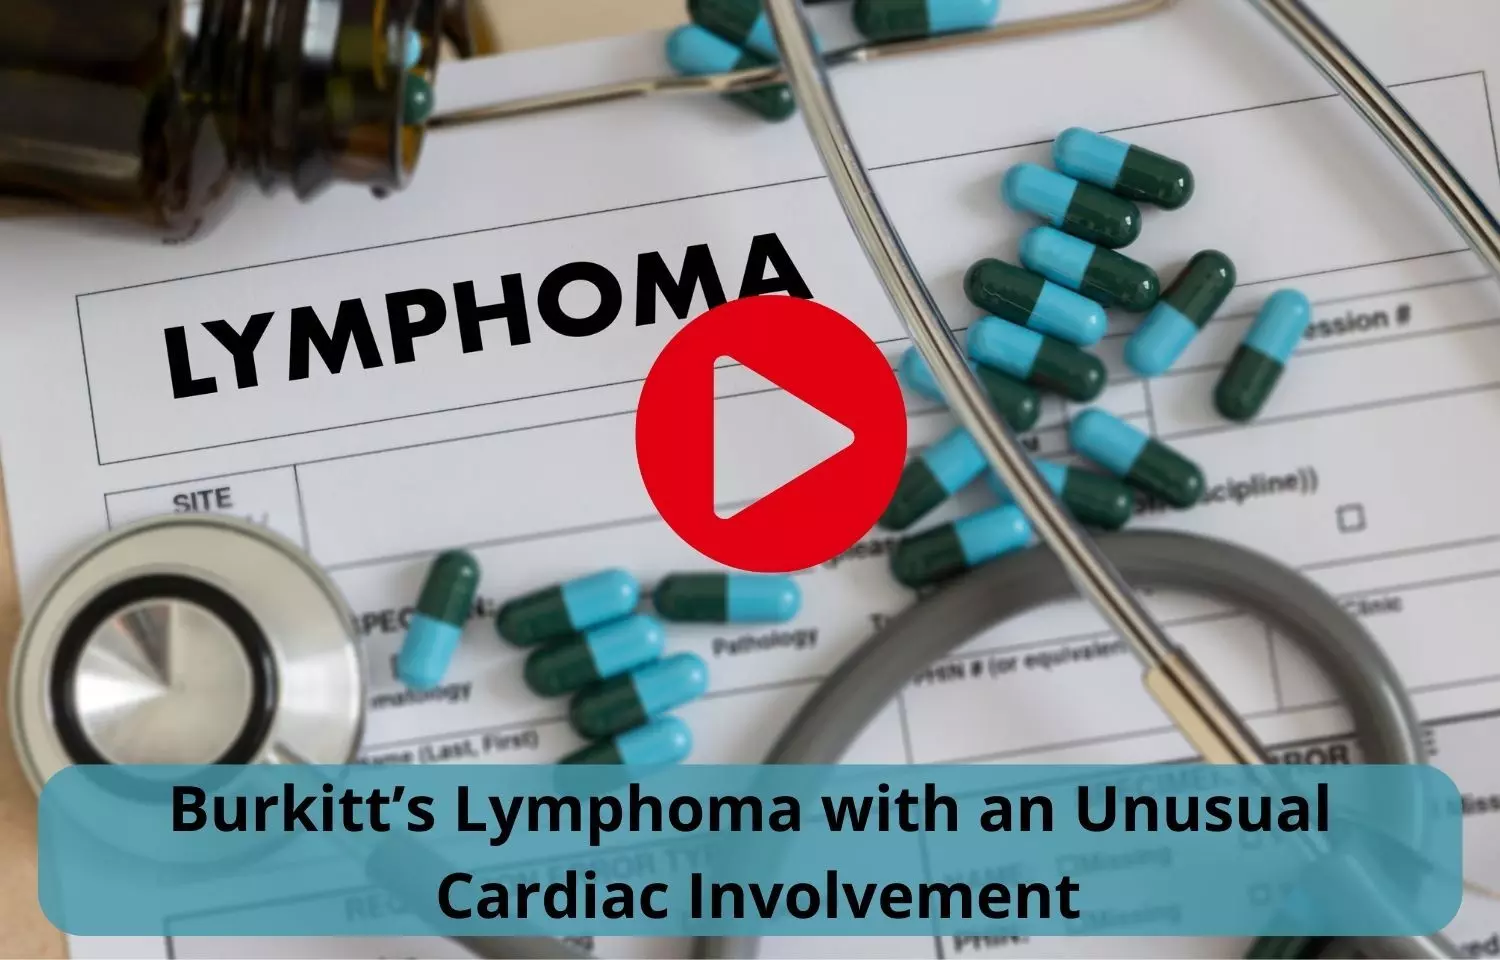 Burkitts Lymphoma with an Unusual Cardiac Involvement